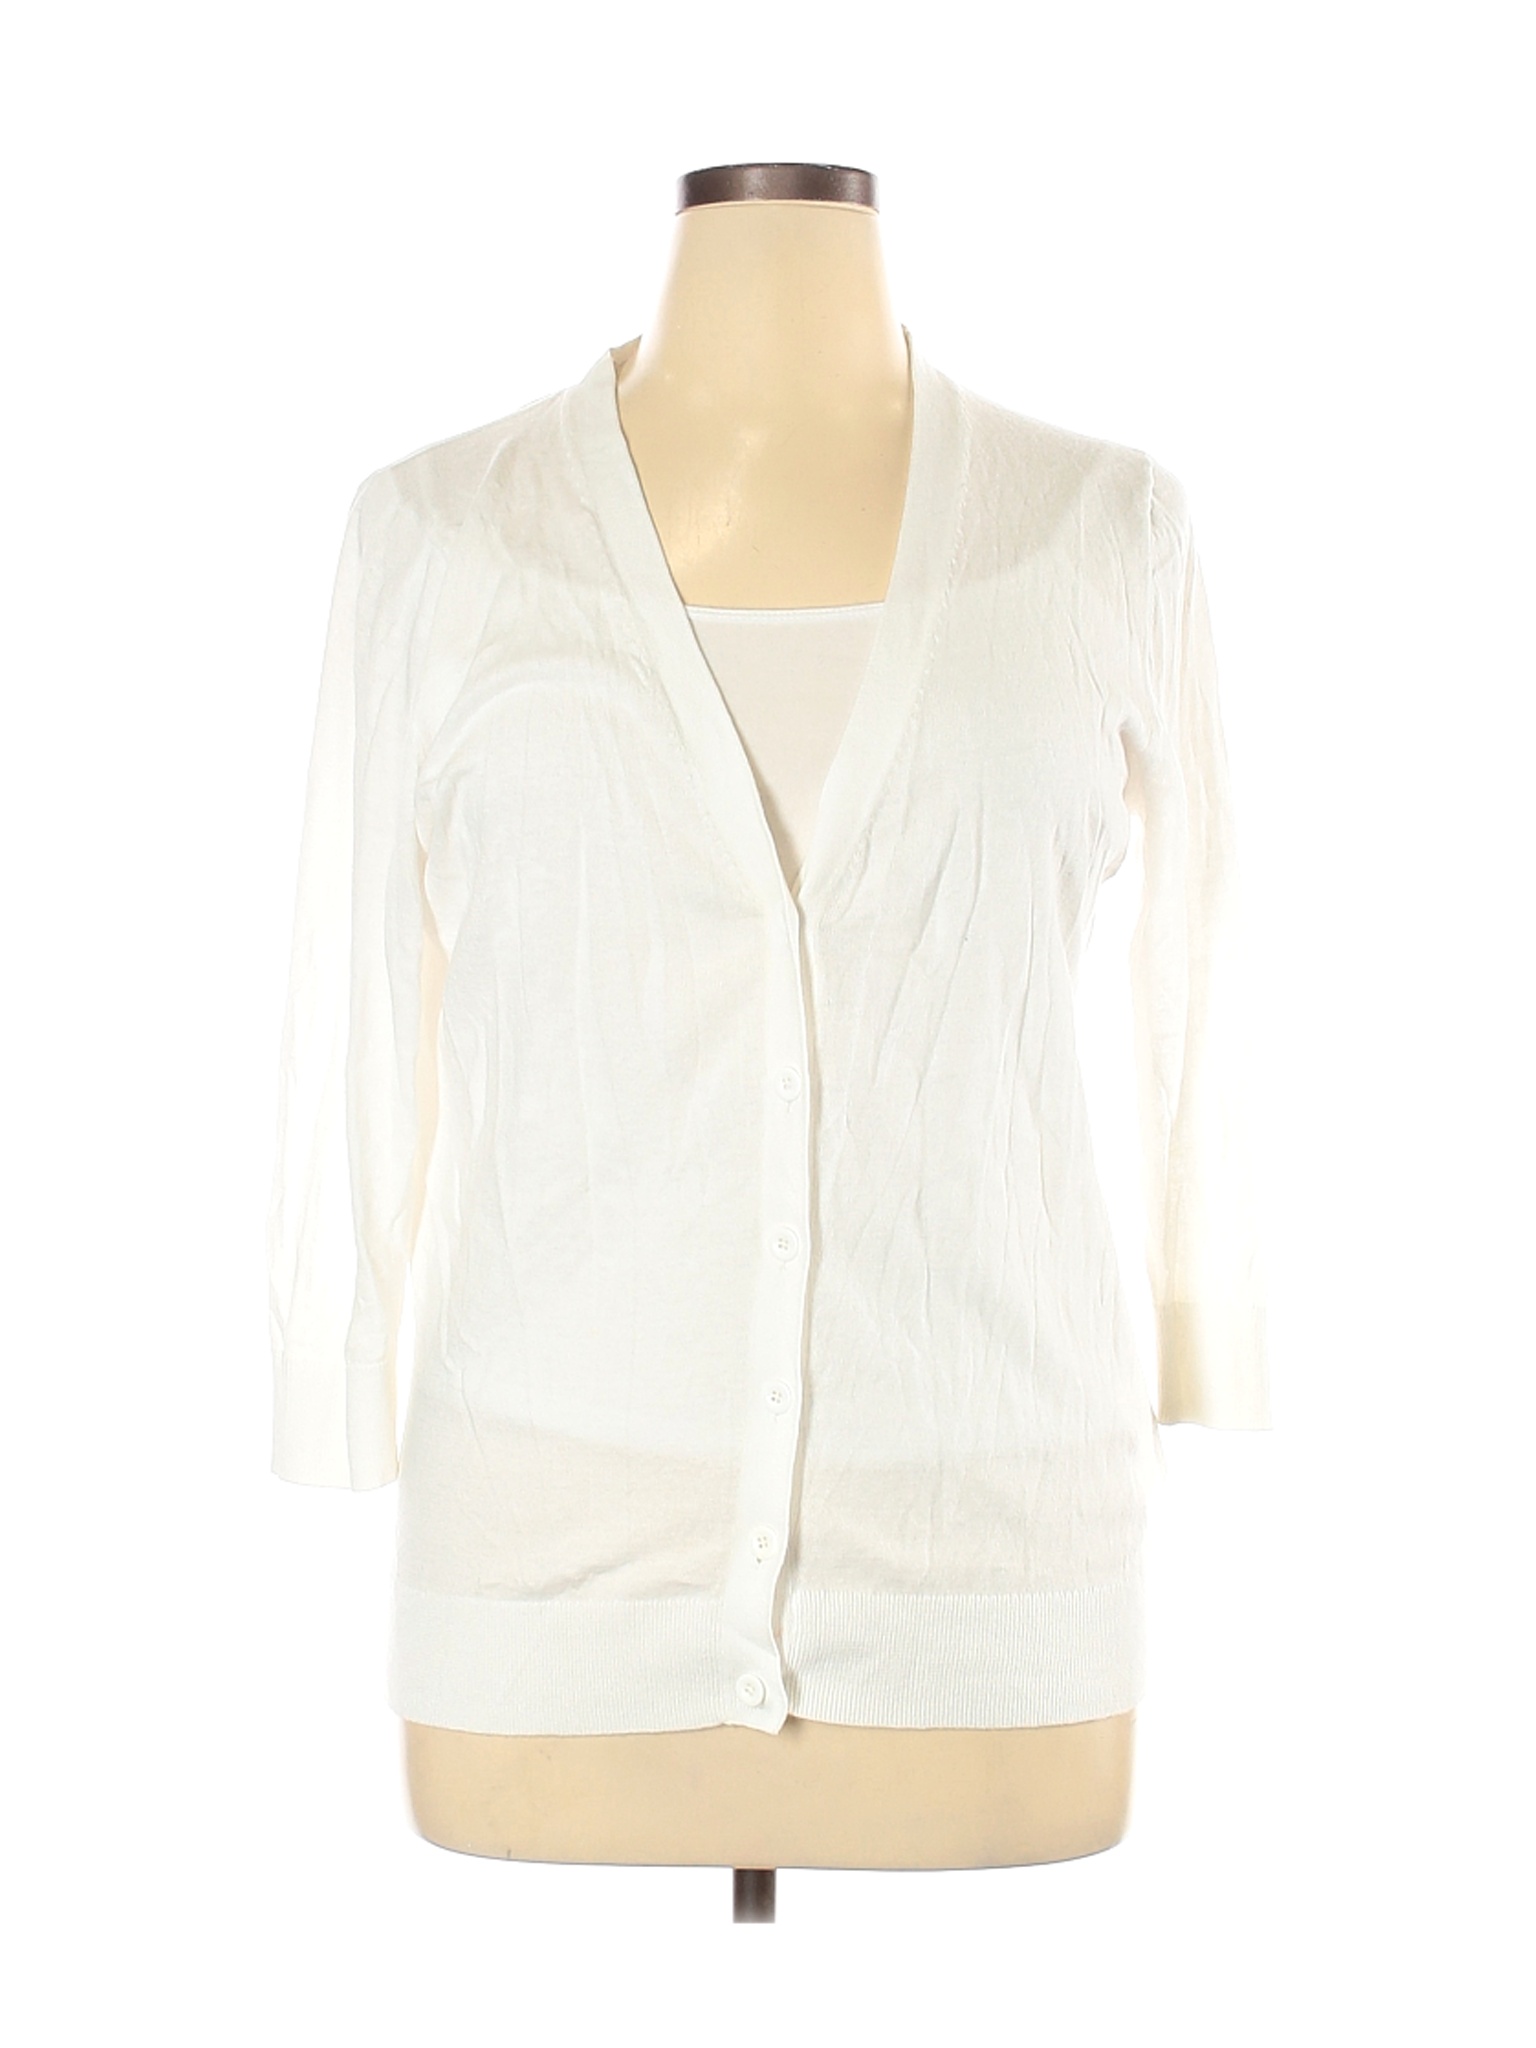 Gap Outlet Women White Cardigan XL | eBay